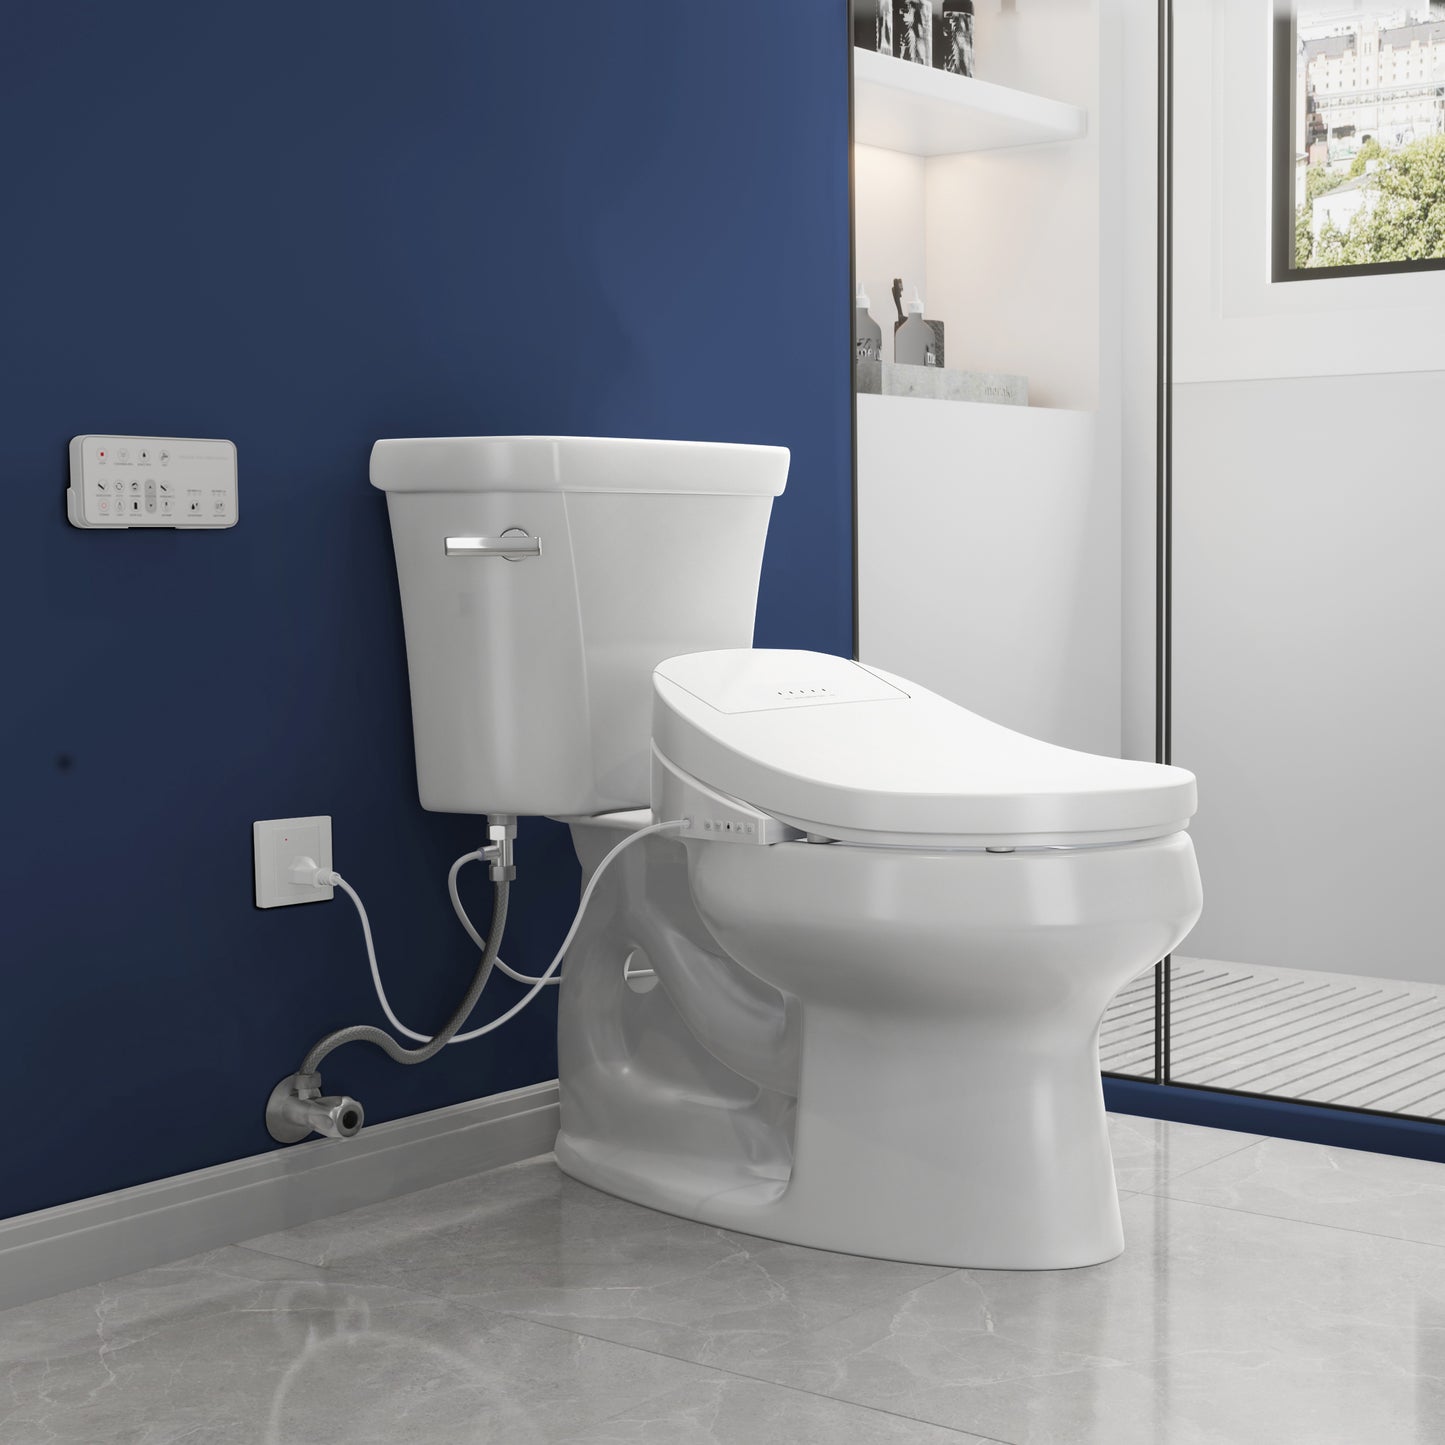 ZMJH ZMA201S Electronic Smart Bidet Toilet Seat